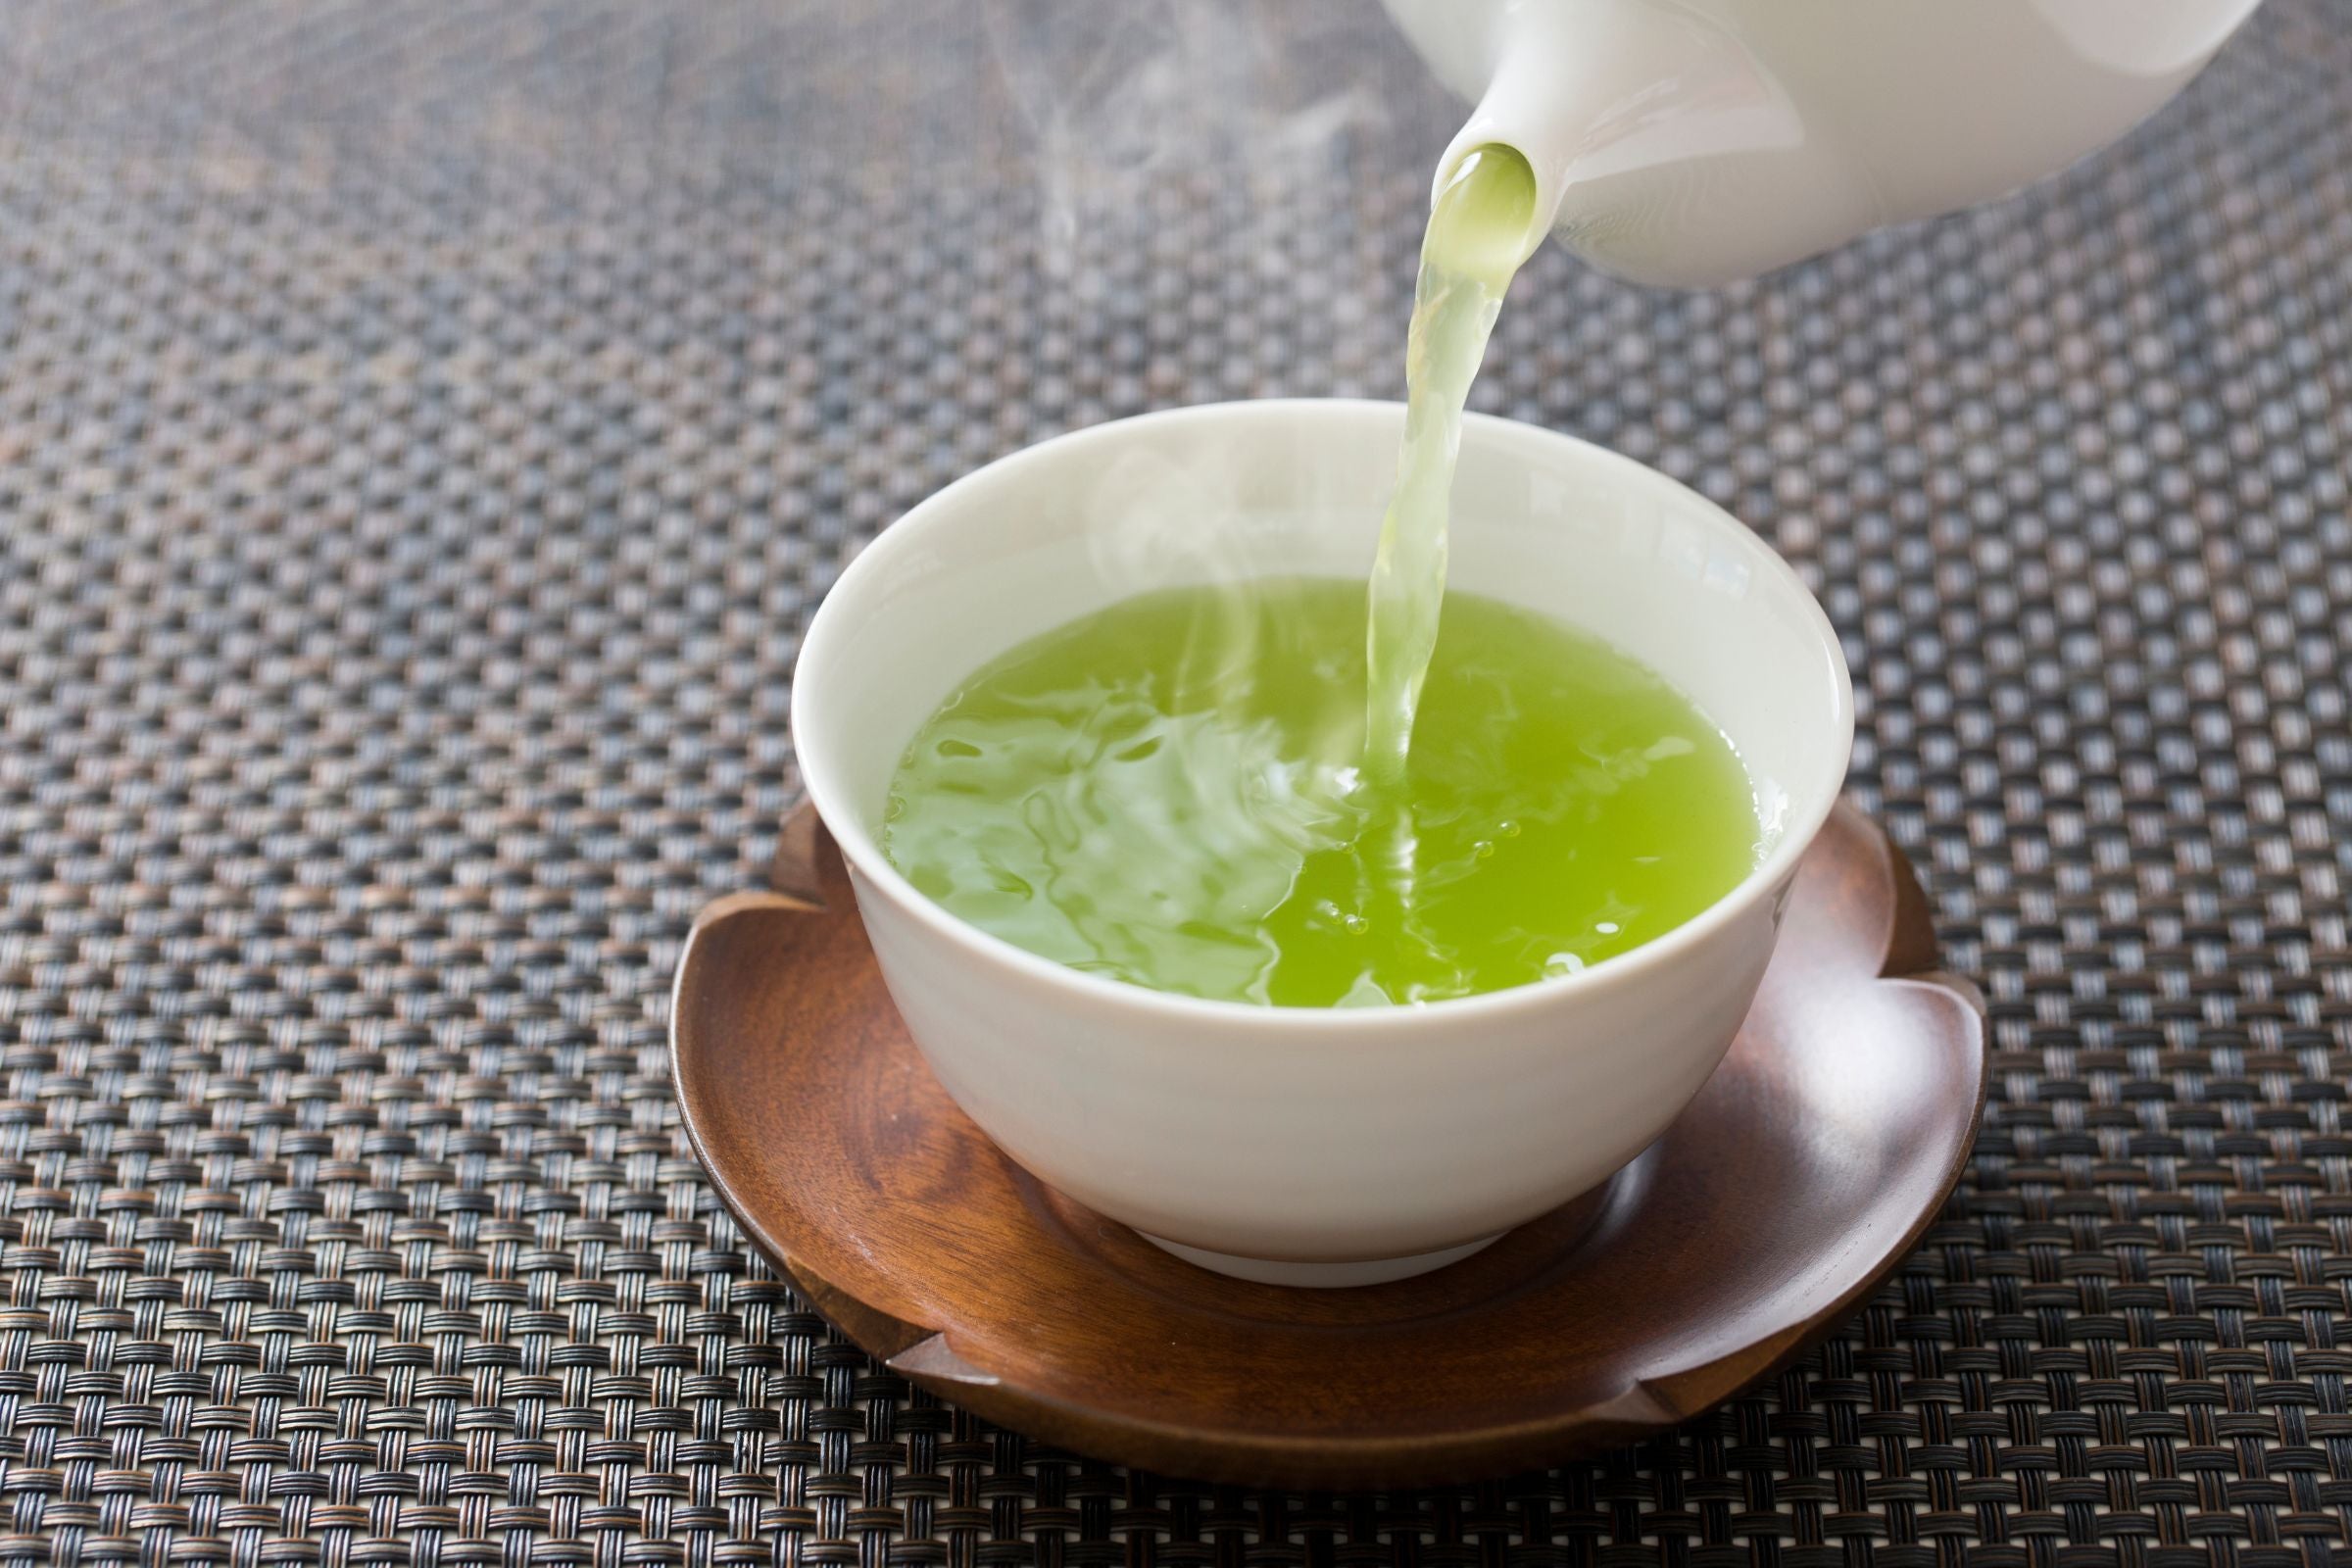 Brew La La - Organic Green Tea Chamomile Lemon - 50 Tea Bags Reviews 2024